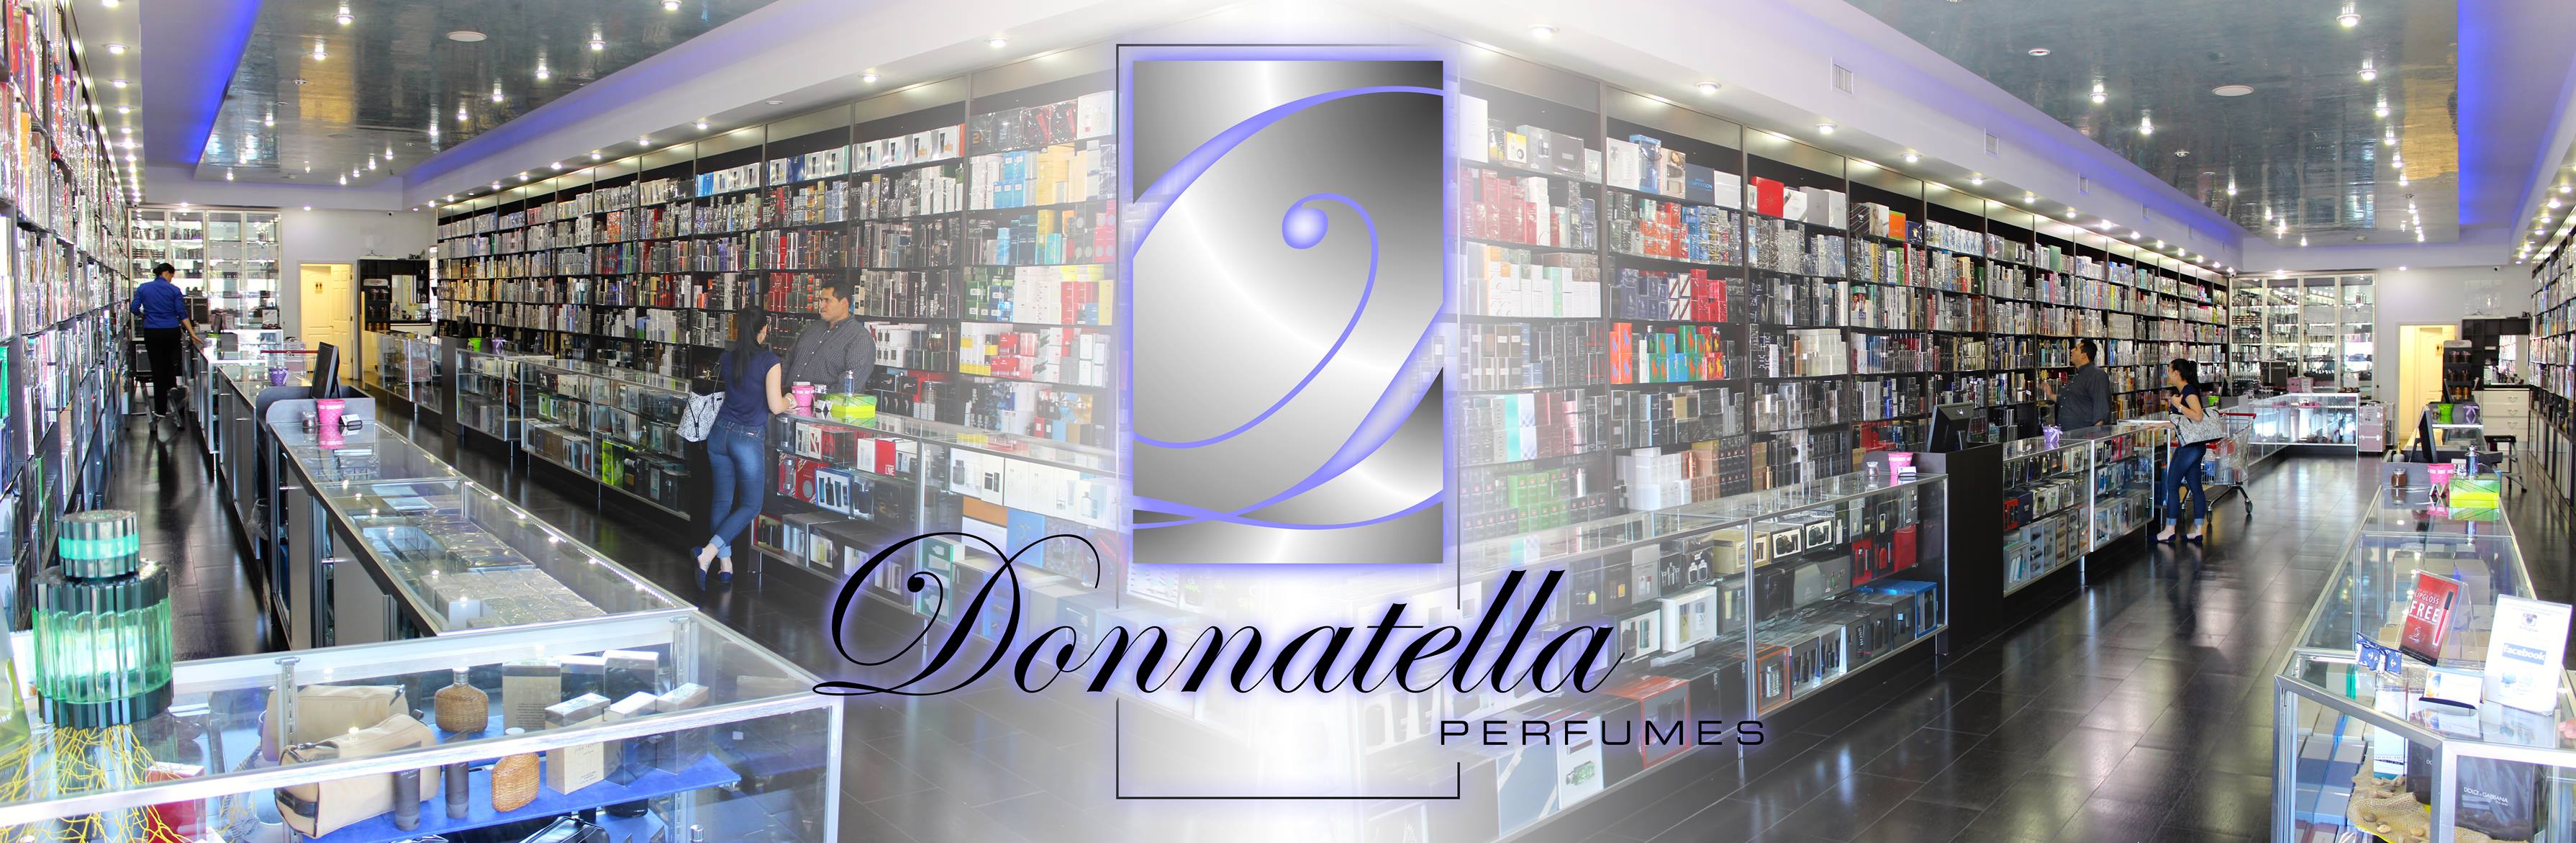 DONNATELLA PERFUMES - New🔥 Bleu Edition de Al Haramain #Shopnow 2273 NW  20th St Miami Fl 33142 (305) 633 6260 Lunes a Sábado 9:00 AM- 6:00PM  www.donnatellaperfumes.com #parfum #scentoftheday #fragance  #fragranceaddict #perfumes #